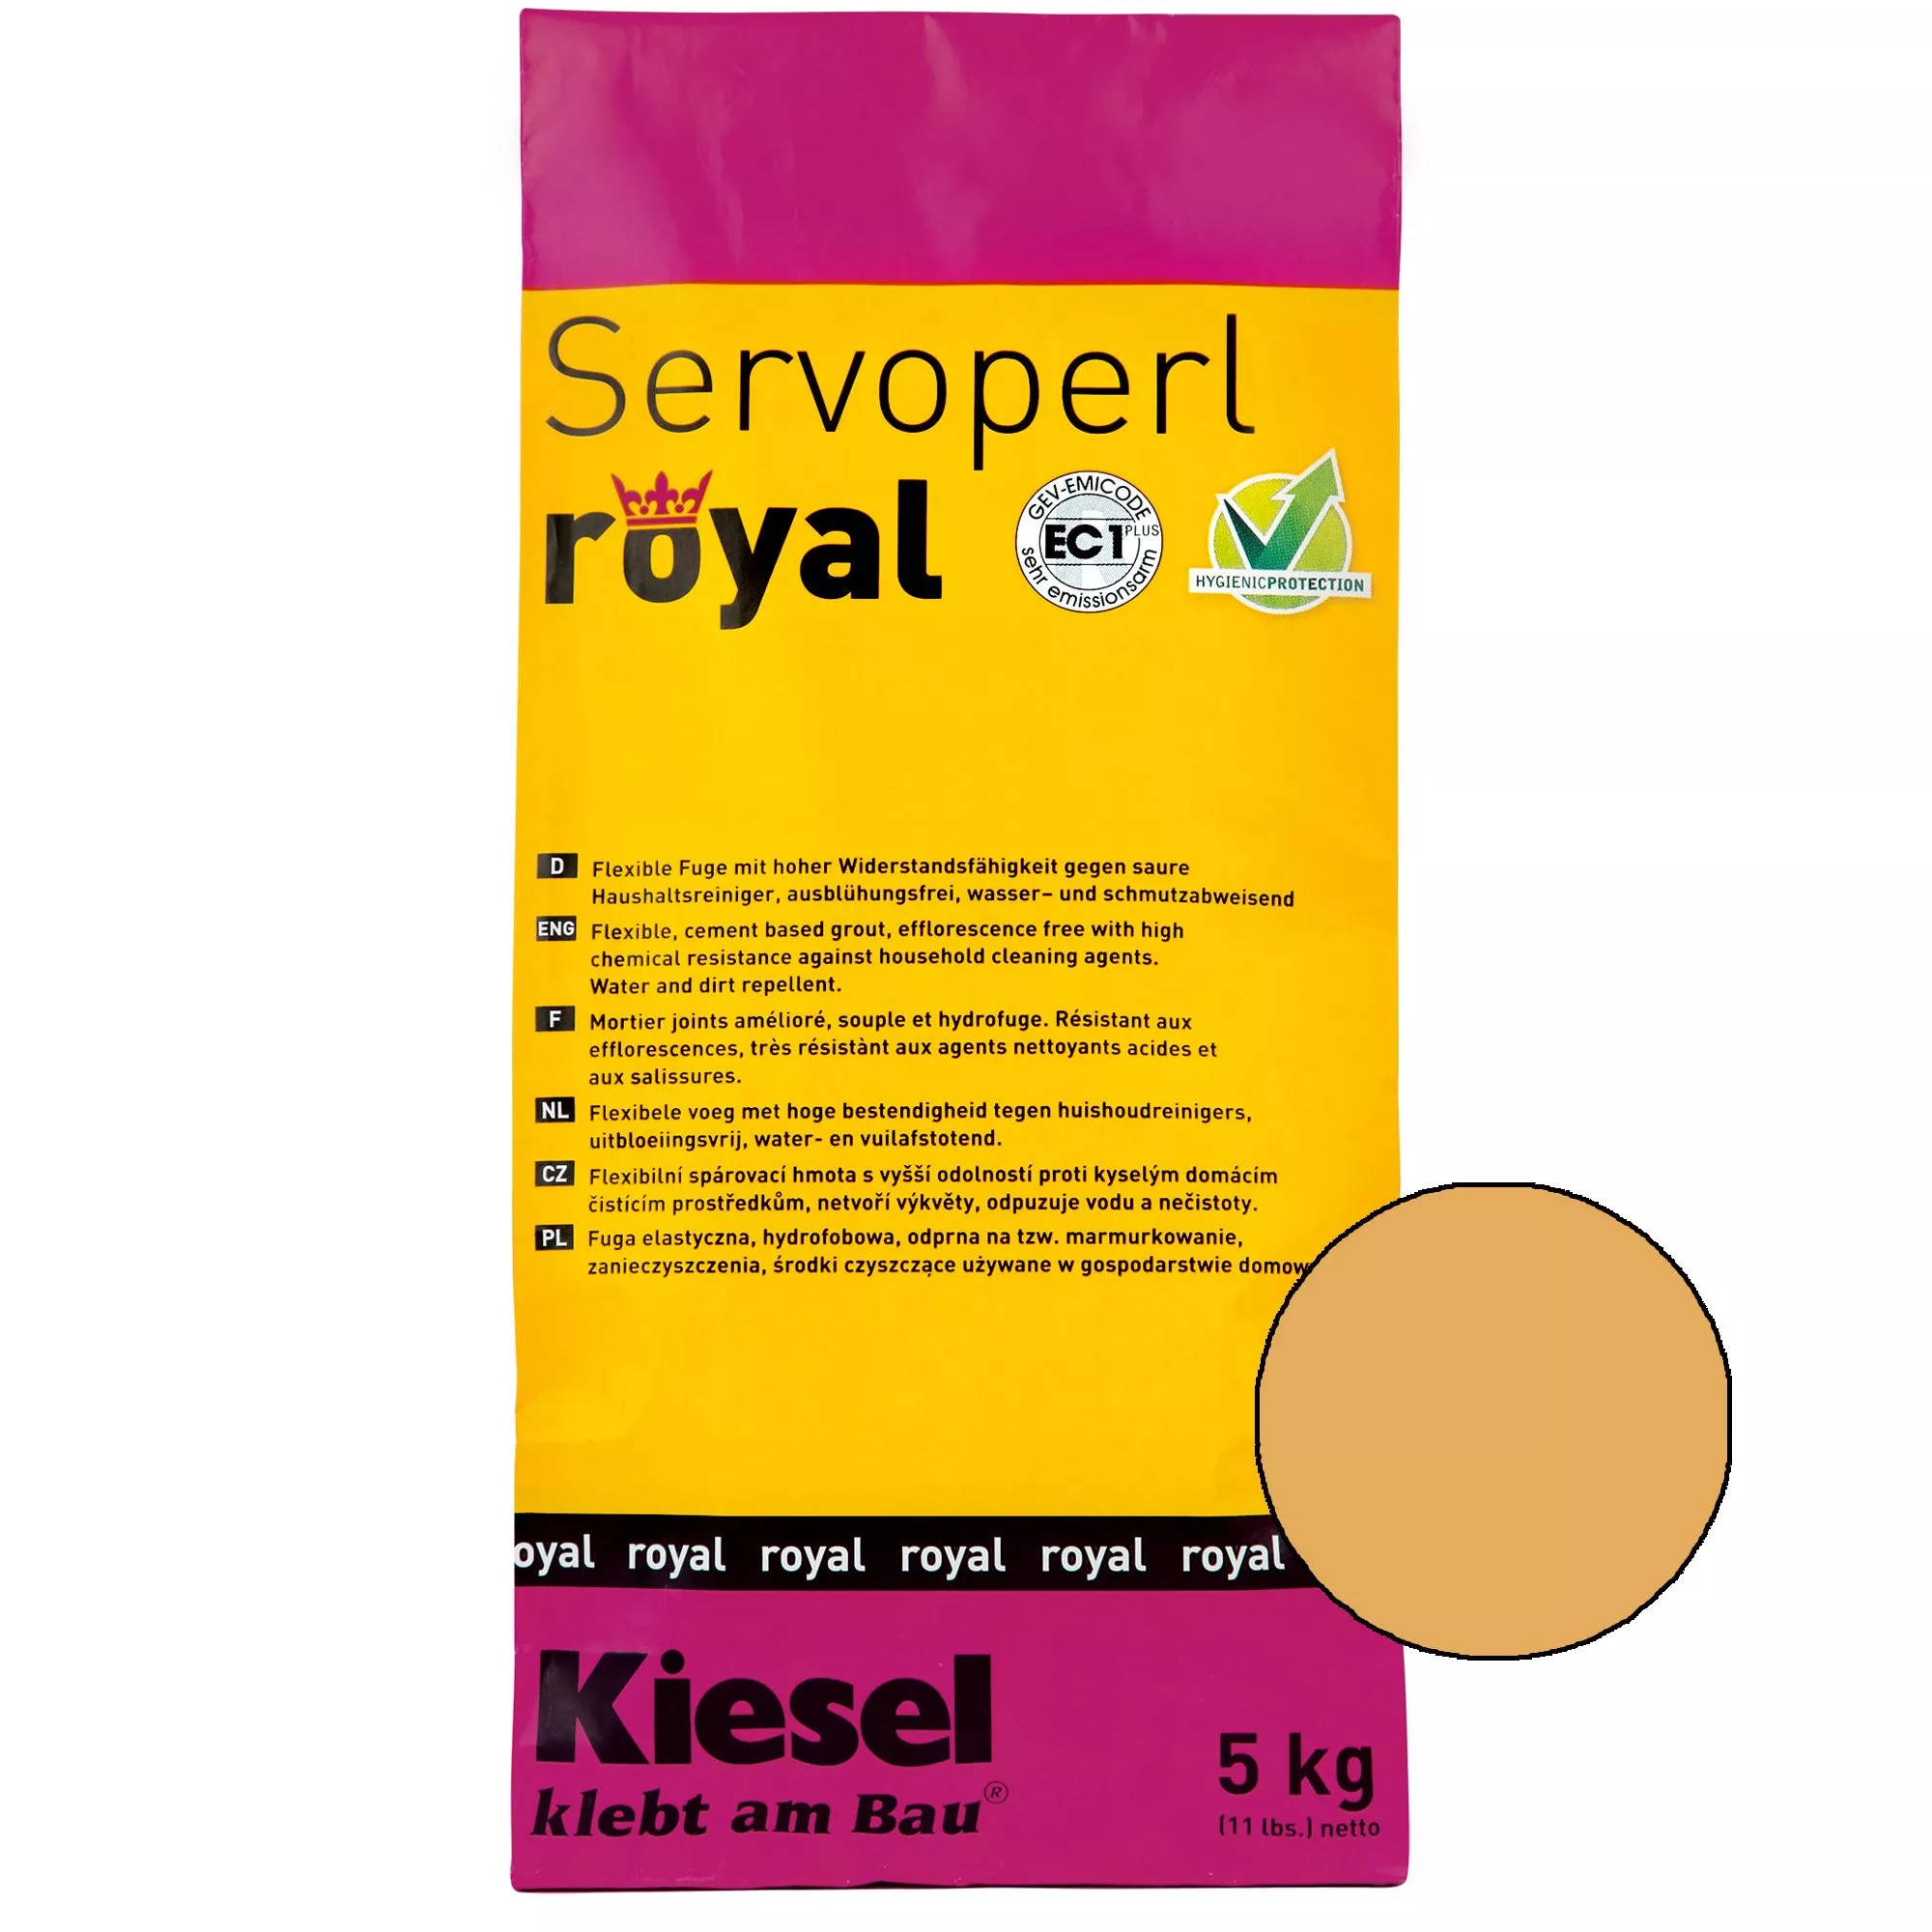 Kiesel Servoperl royal - compus pentru articulații-5kg Sahara